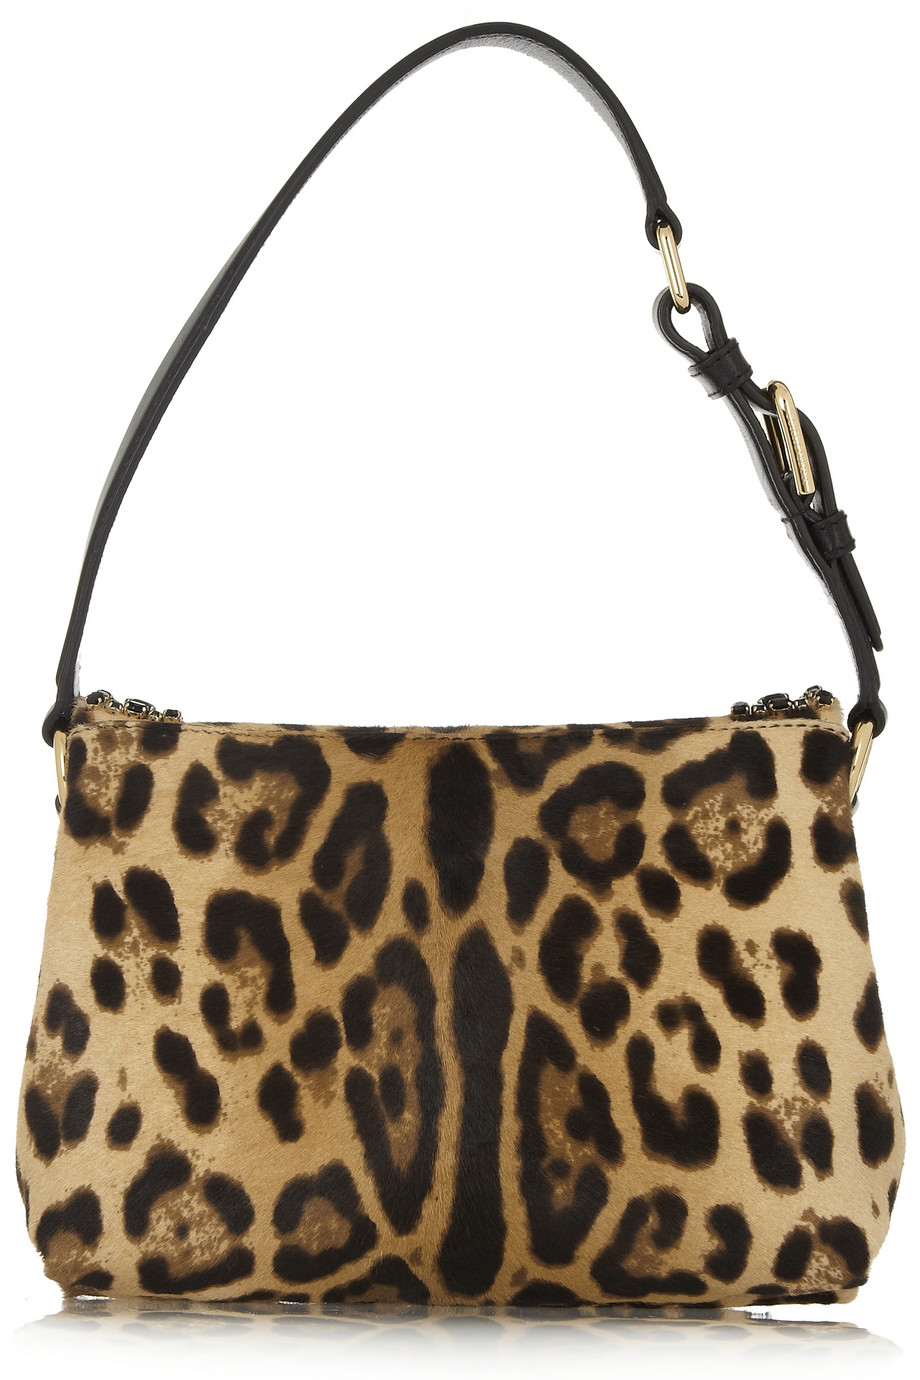 Lyst - Dolce & Gabbana Miss Dolce Medium Leopard Print Calf Hair ...